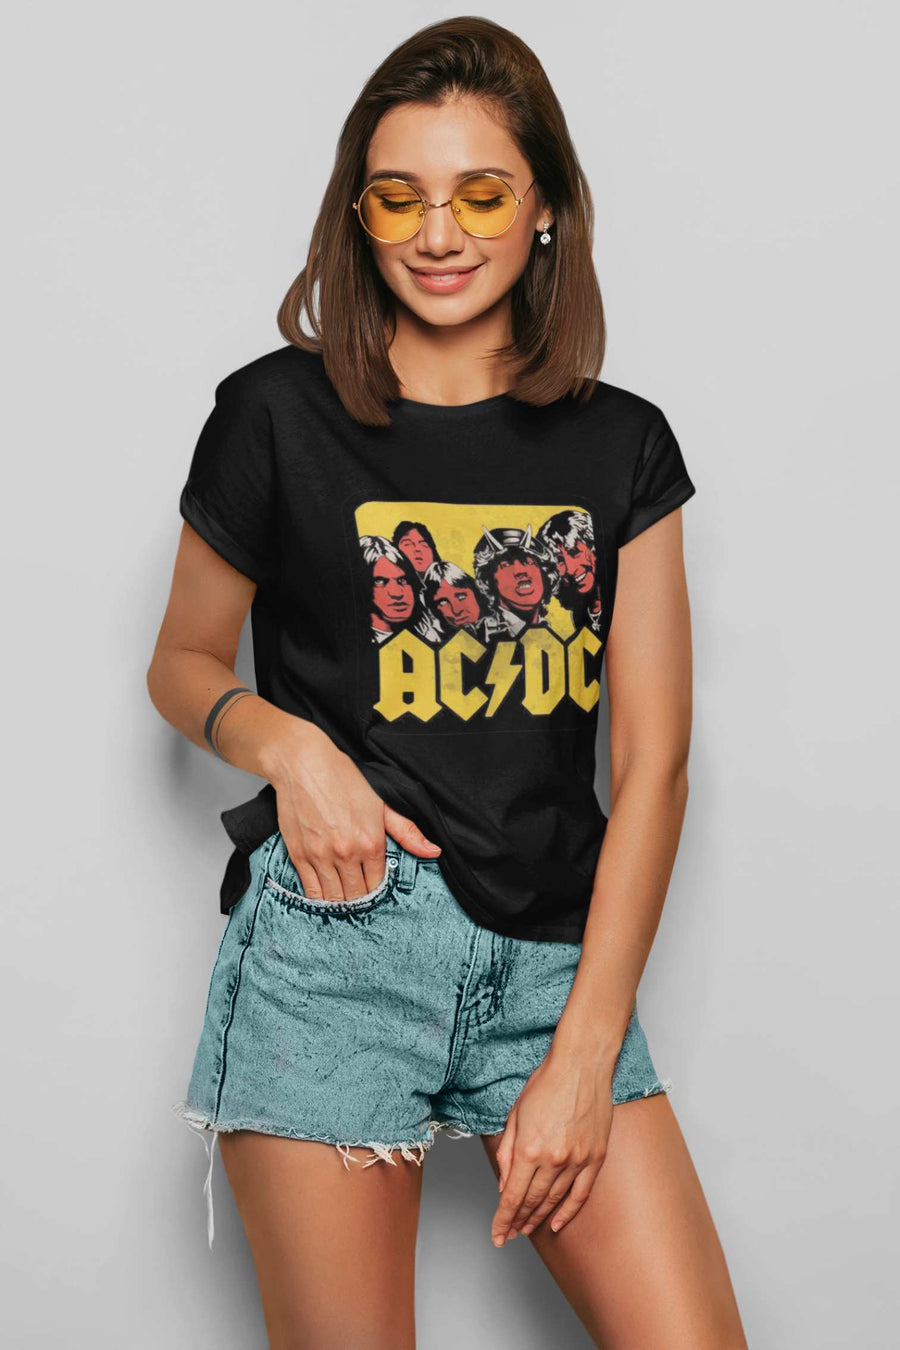 ACDC- Half sleeve t-shirt - Botnia